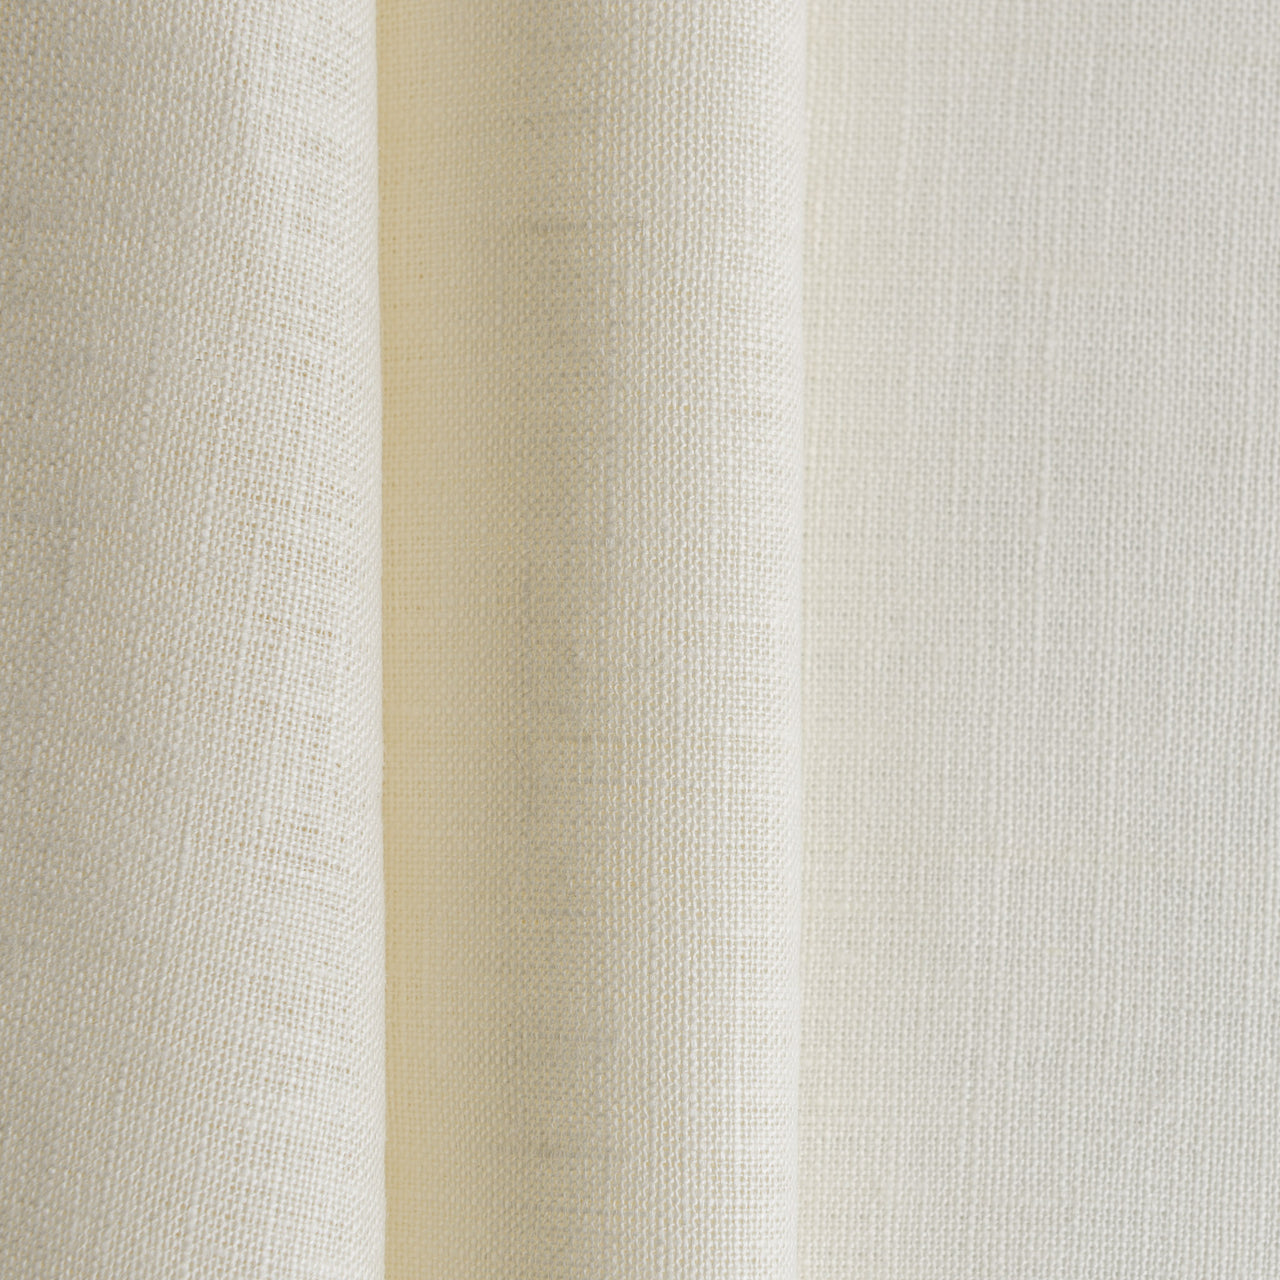 Cream Blackout S-fold Linen Curtain Panel - Heading for Rings and Hooks - Linen Darkening Curtain